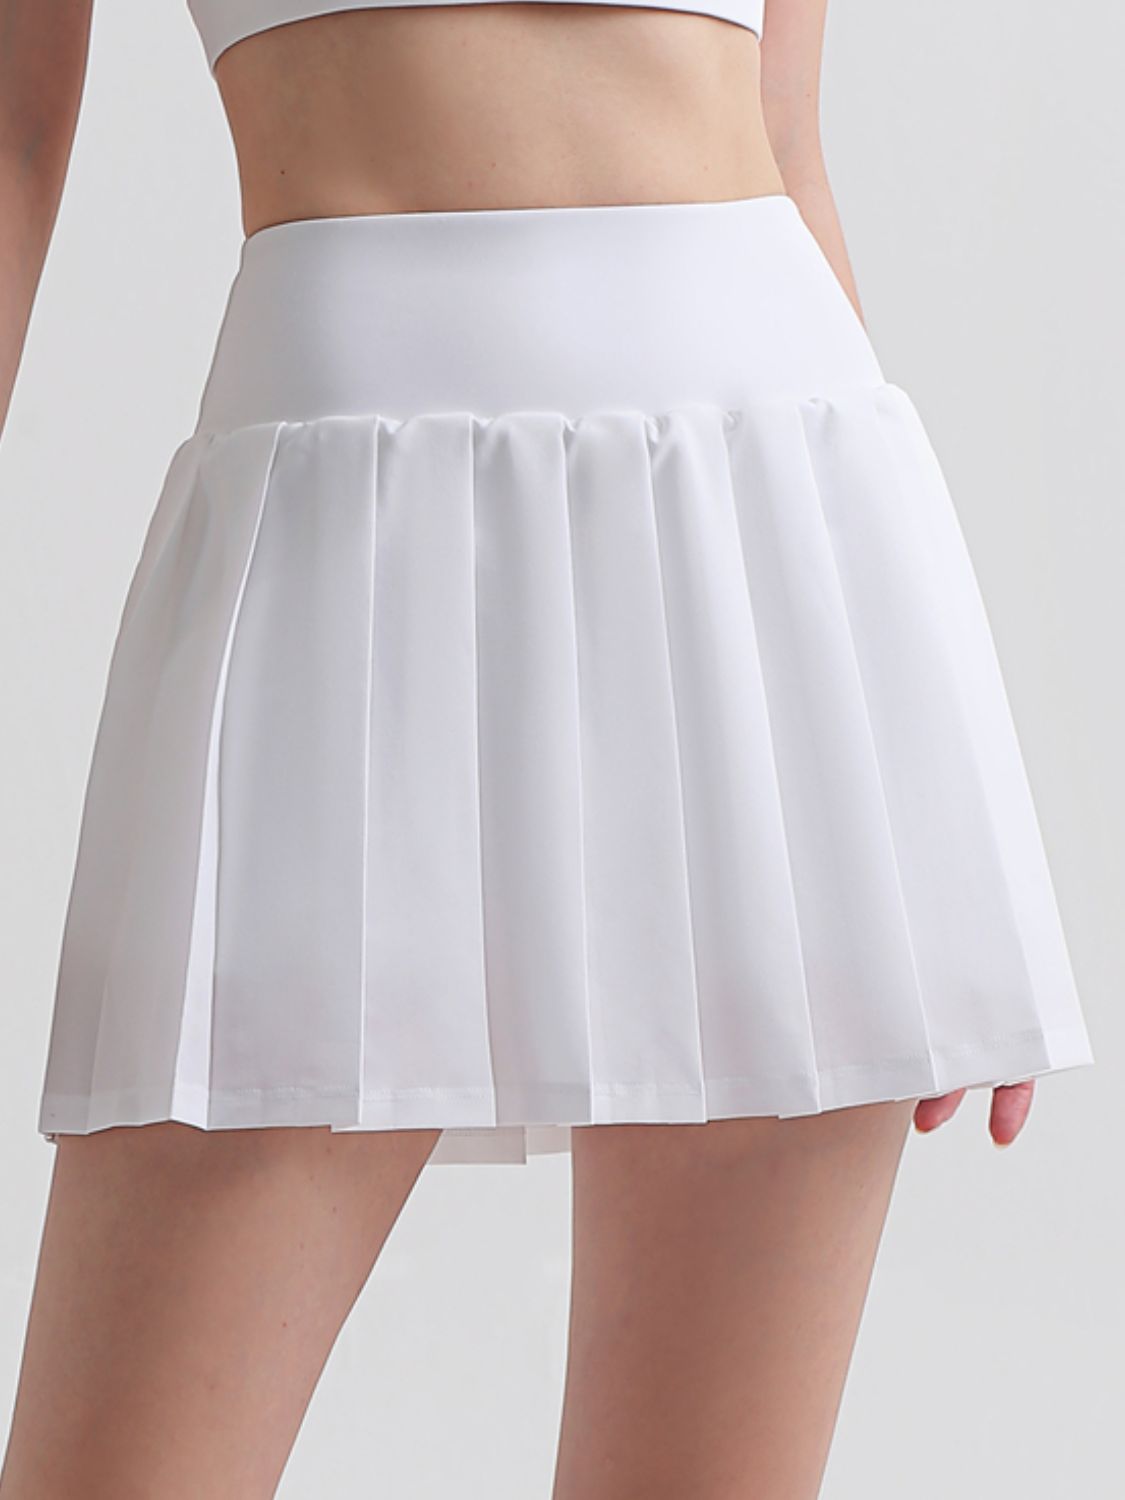 Women’s Pleated Elastic Waistband Sports Skirt